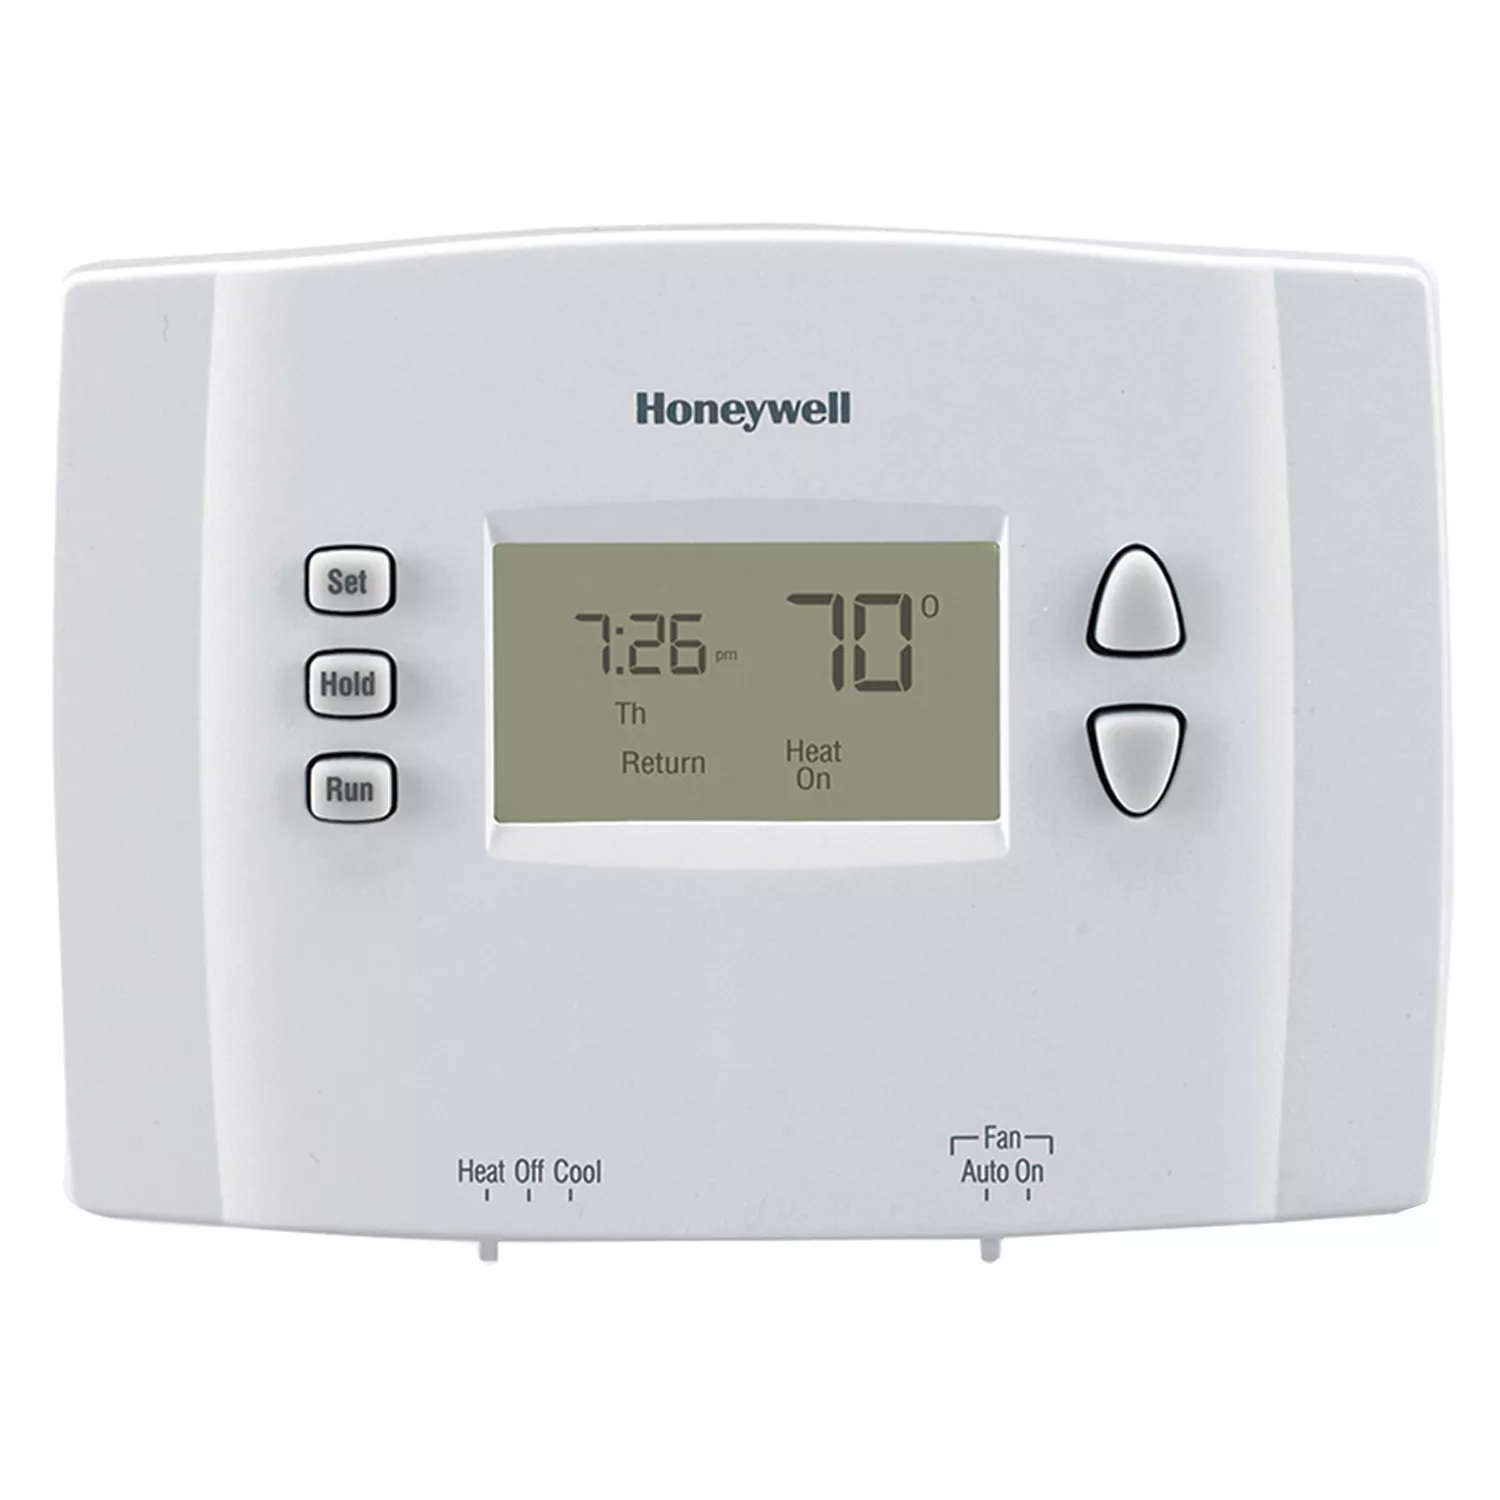 honeywell thermostat screen not responding